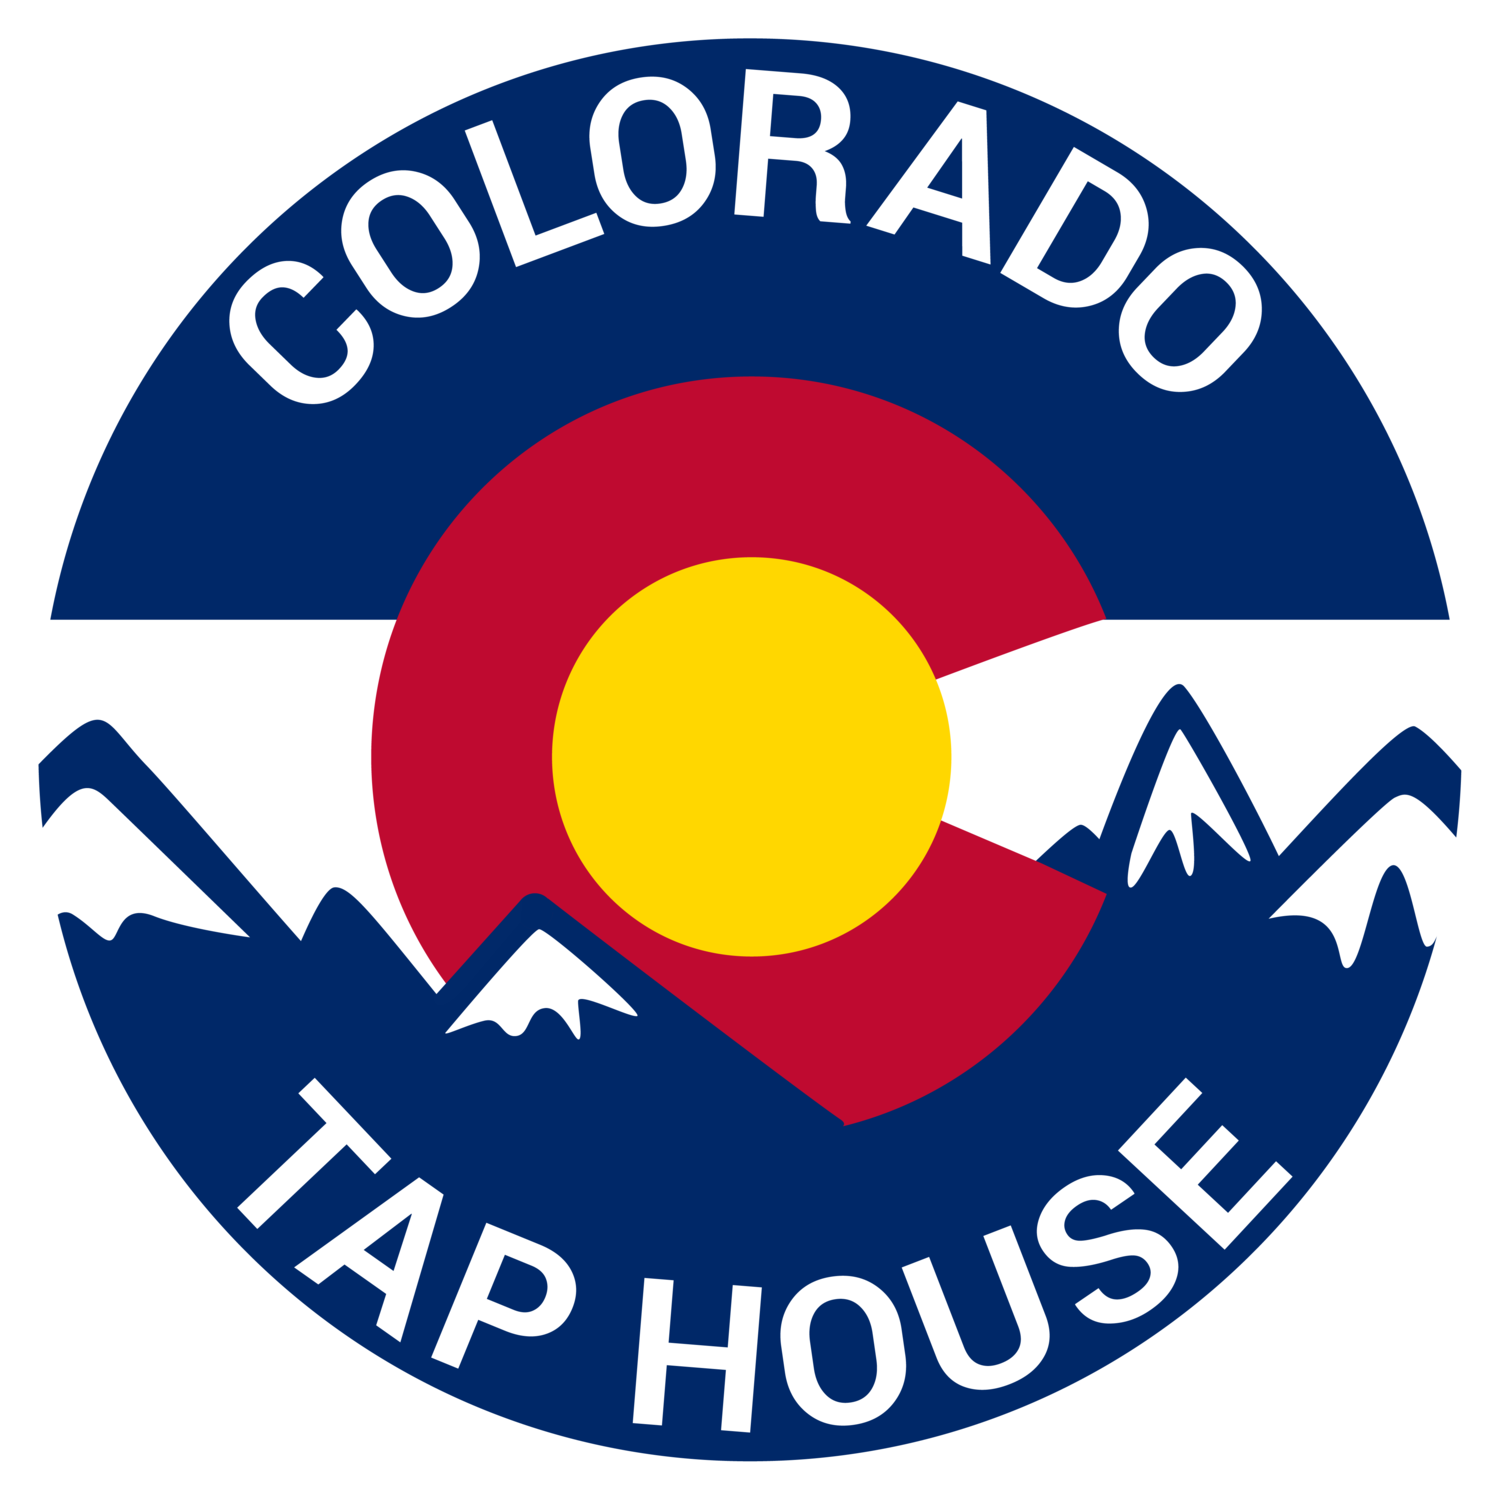 Colorado Tap House